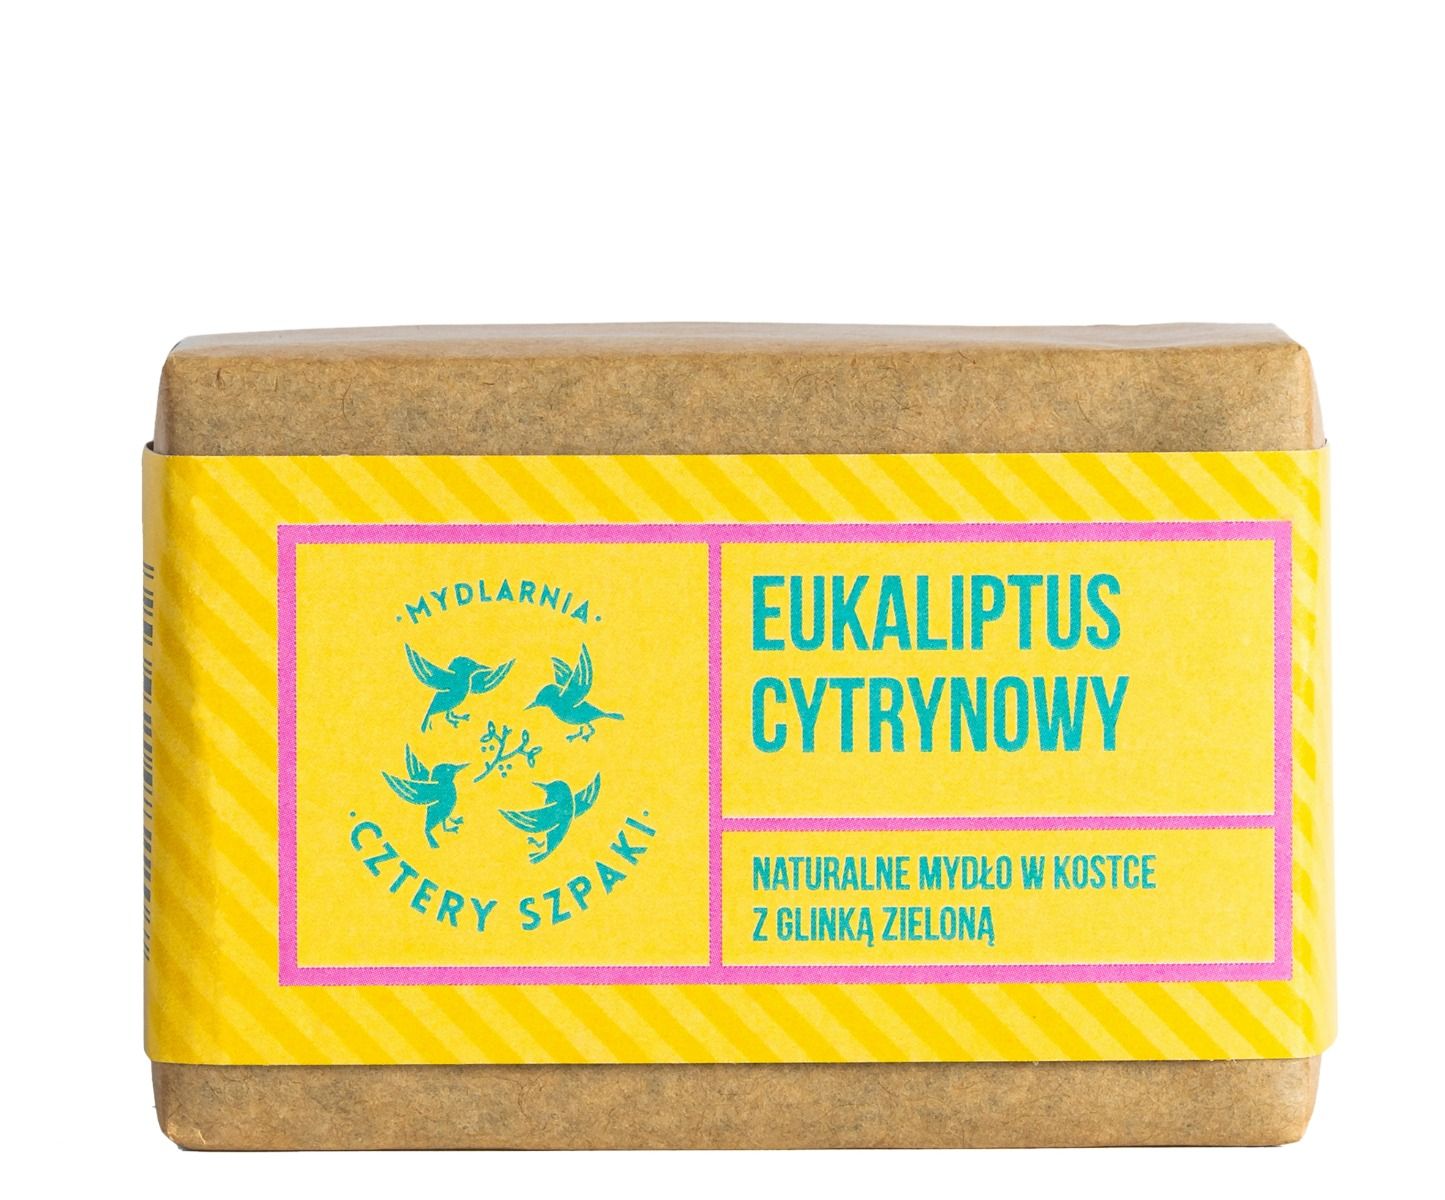 цена Mydlarnia Cztery Szpaki Eukaliptus Cytrynowy кусковое мыло, 110 g